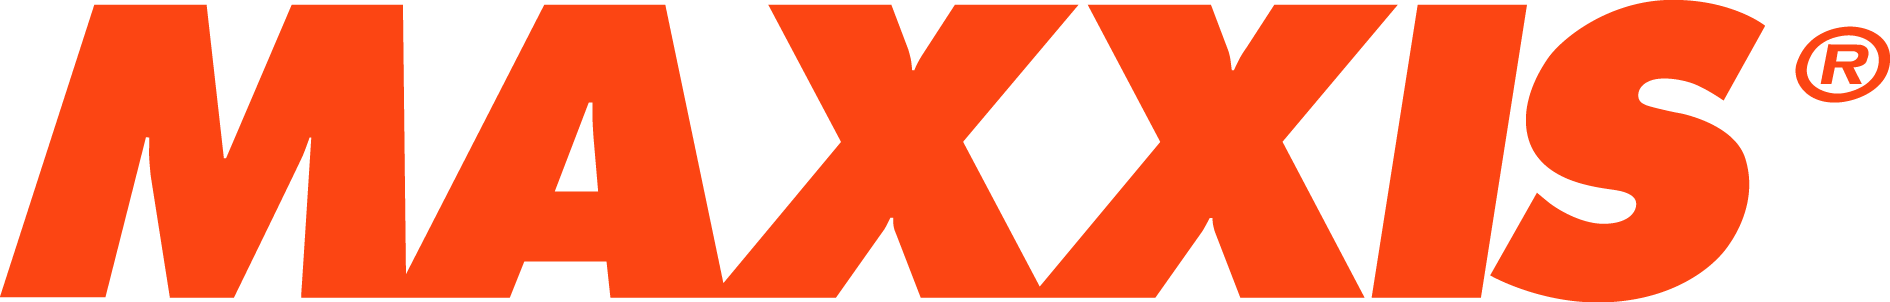 Maxxis Logo - Logos | Maxxis Tires USA